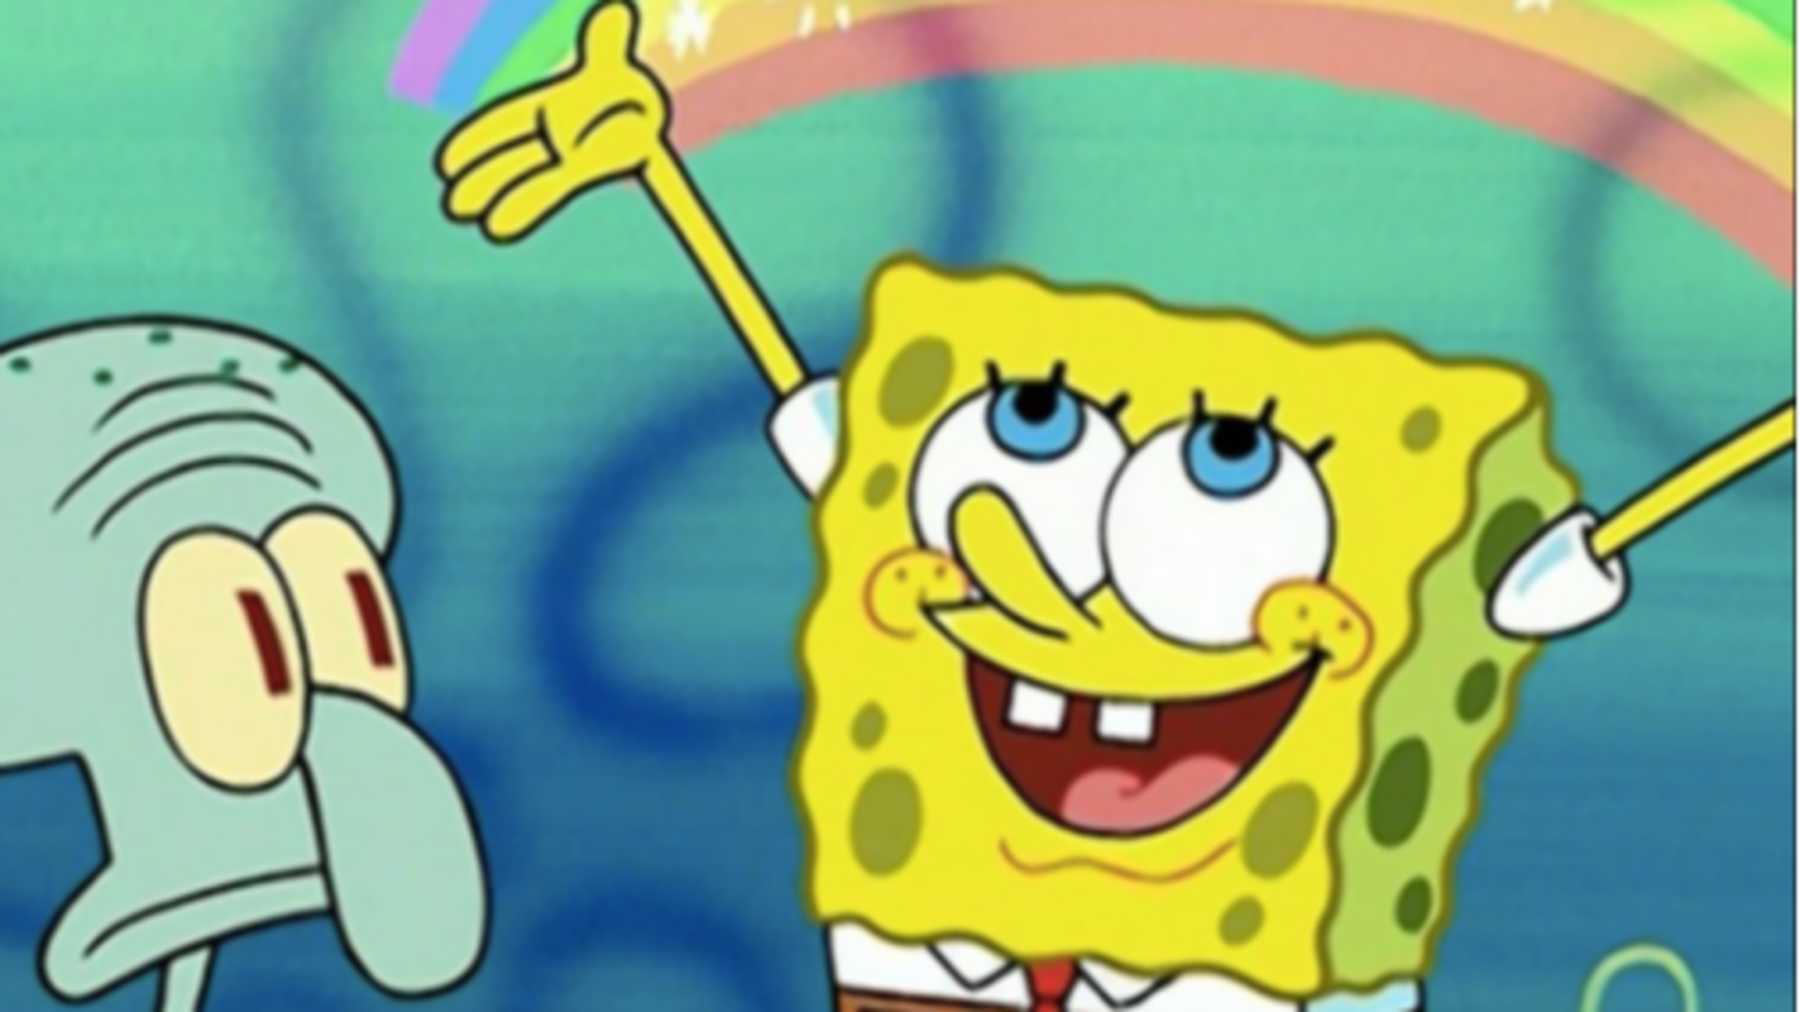 Nickelodeon Confirms Spongebob Is A Member Of The Lgbtq Community